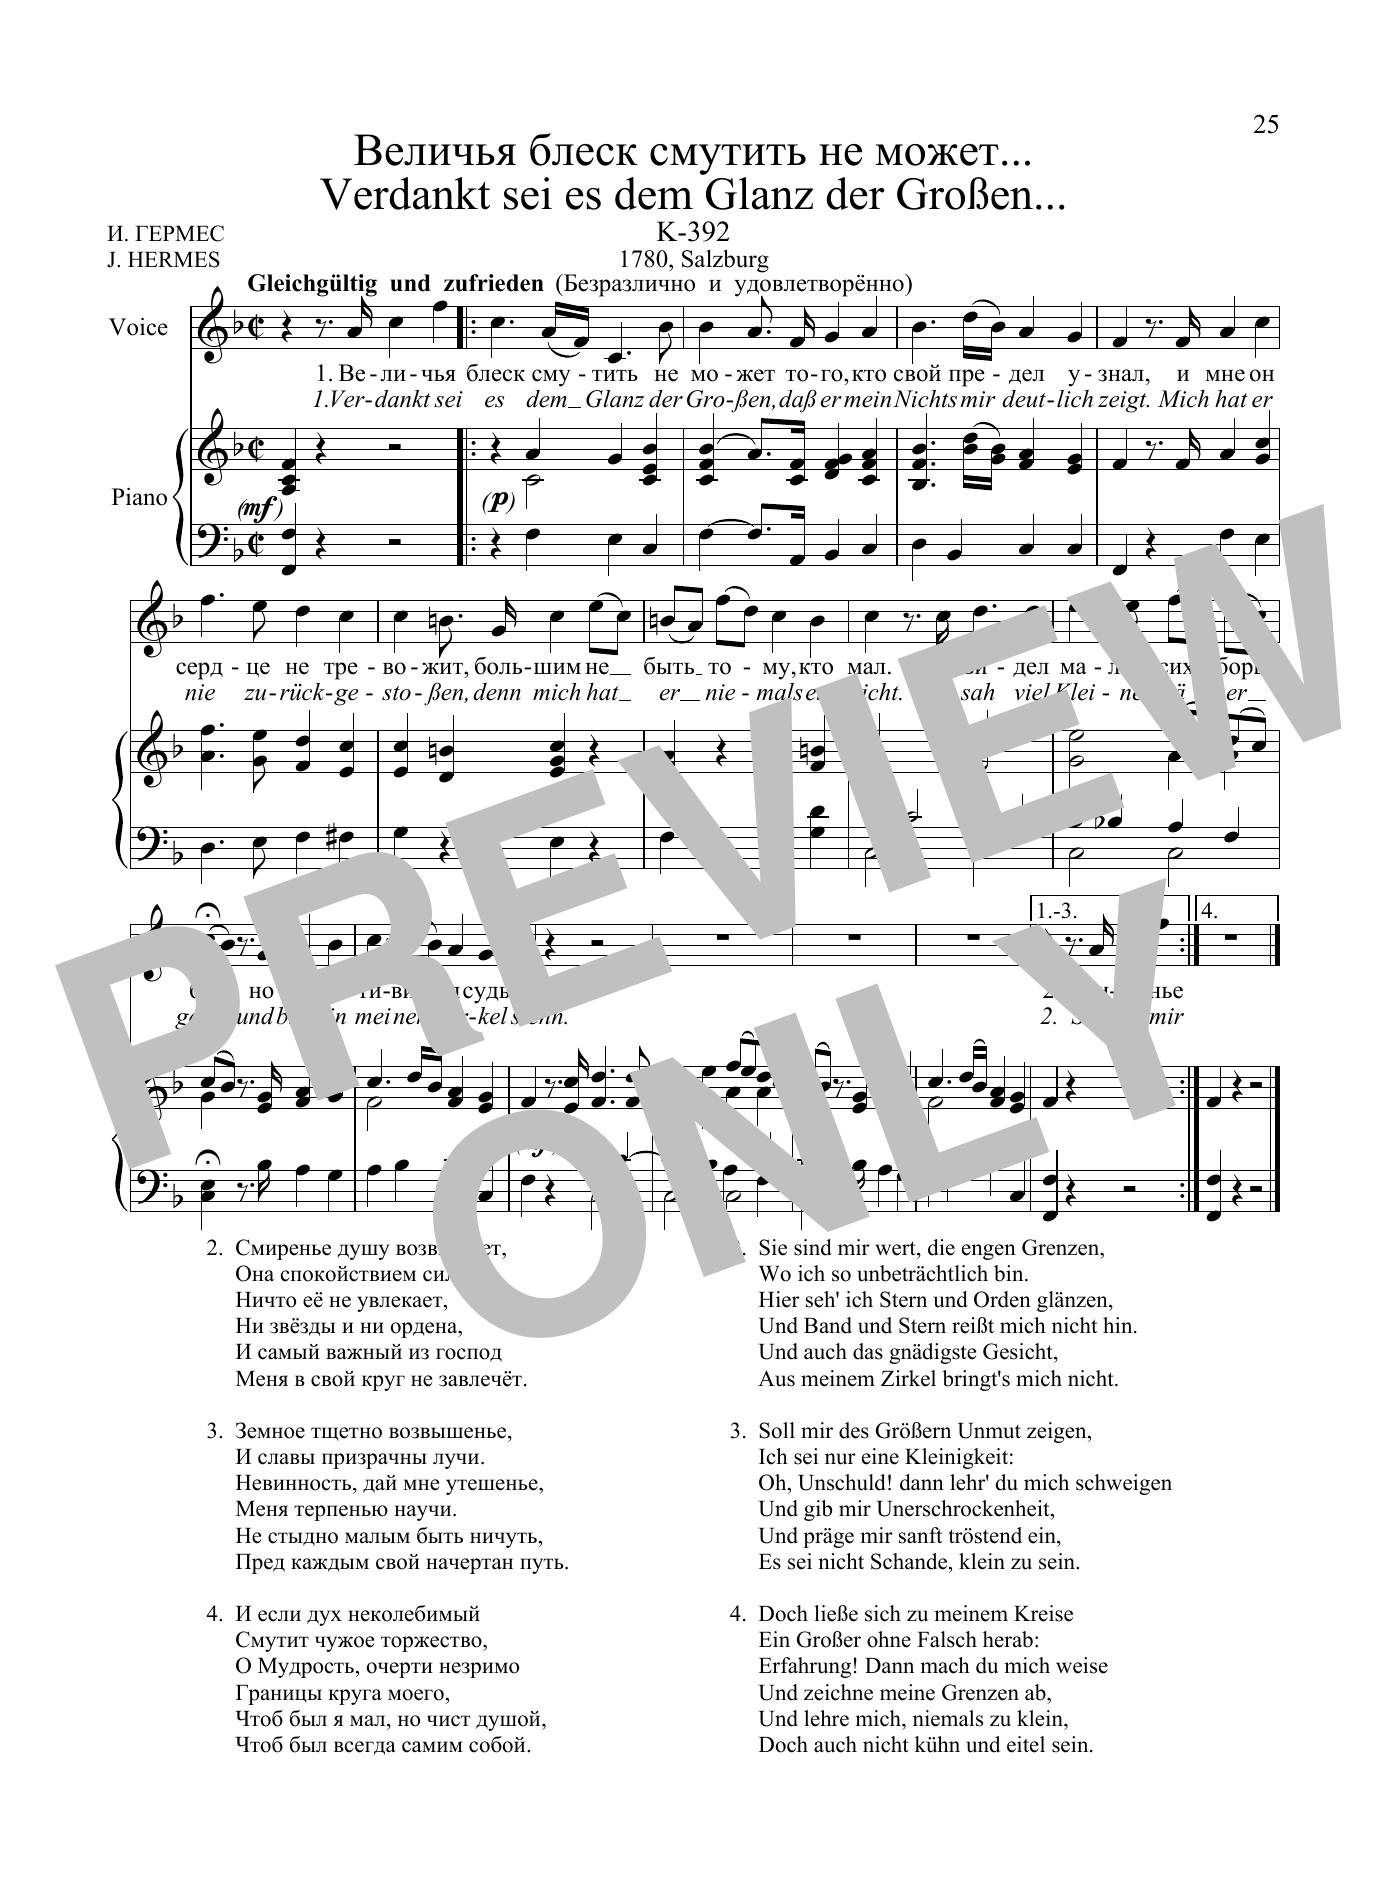 Wolfgang Amadeus Mozart 36 Songs Vol. 1: Verdankt sei es dem Glanz der Großen, K. 392 Sheet Music Notes & Chords for Piano & Vocal - Download or Print PDF